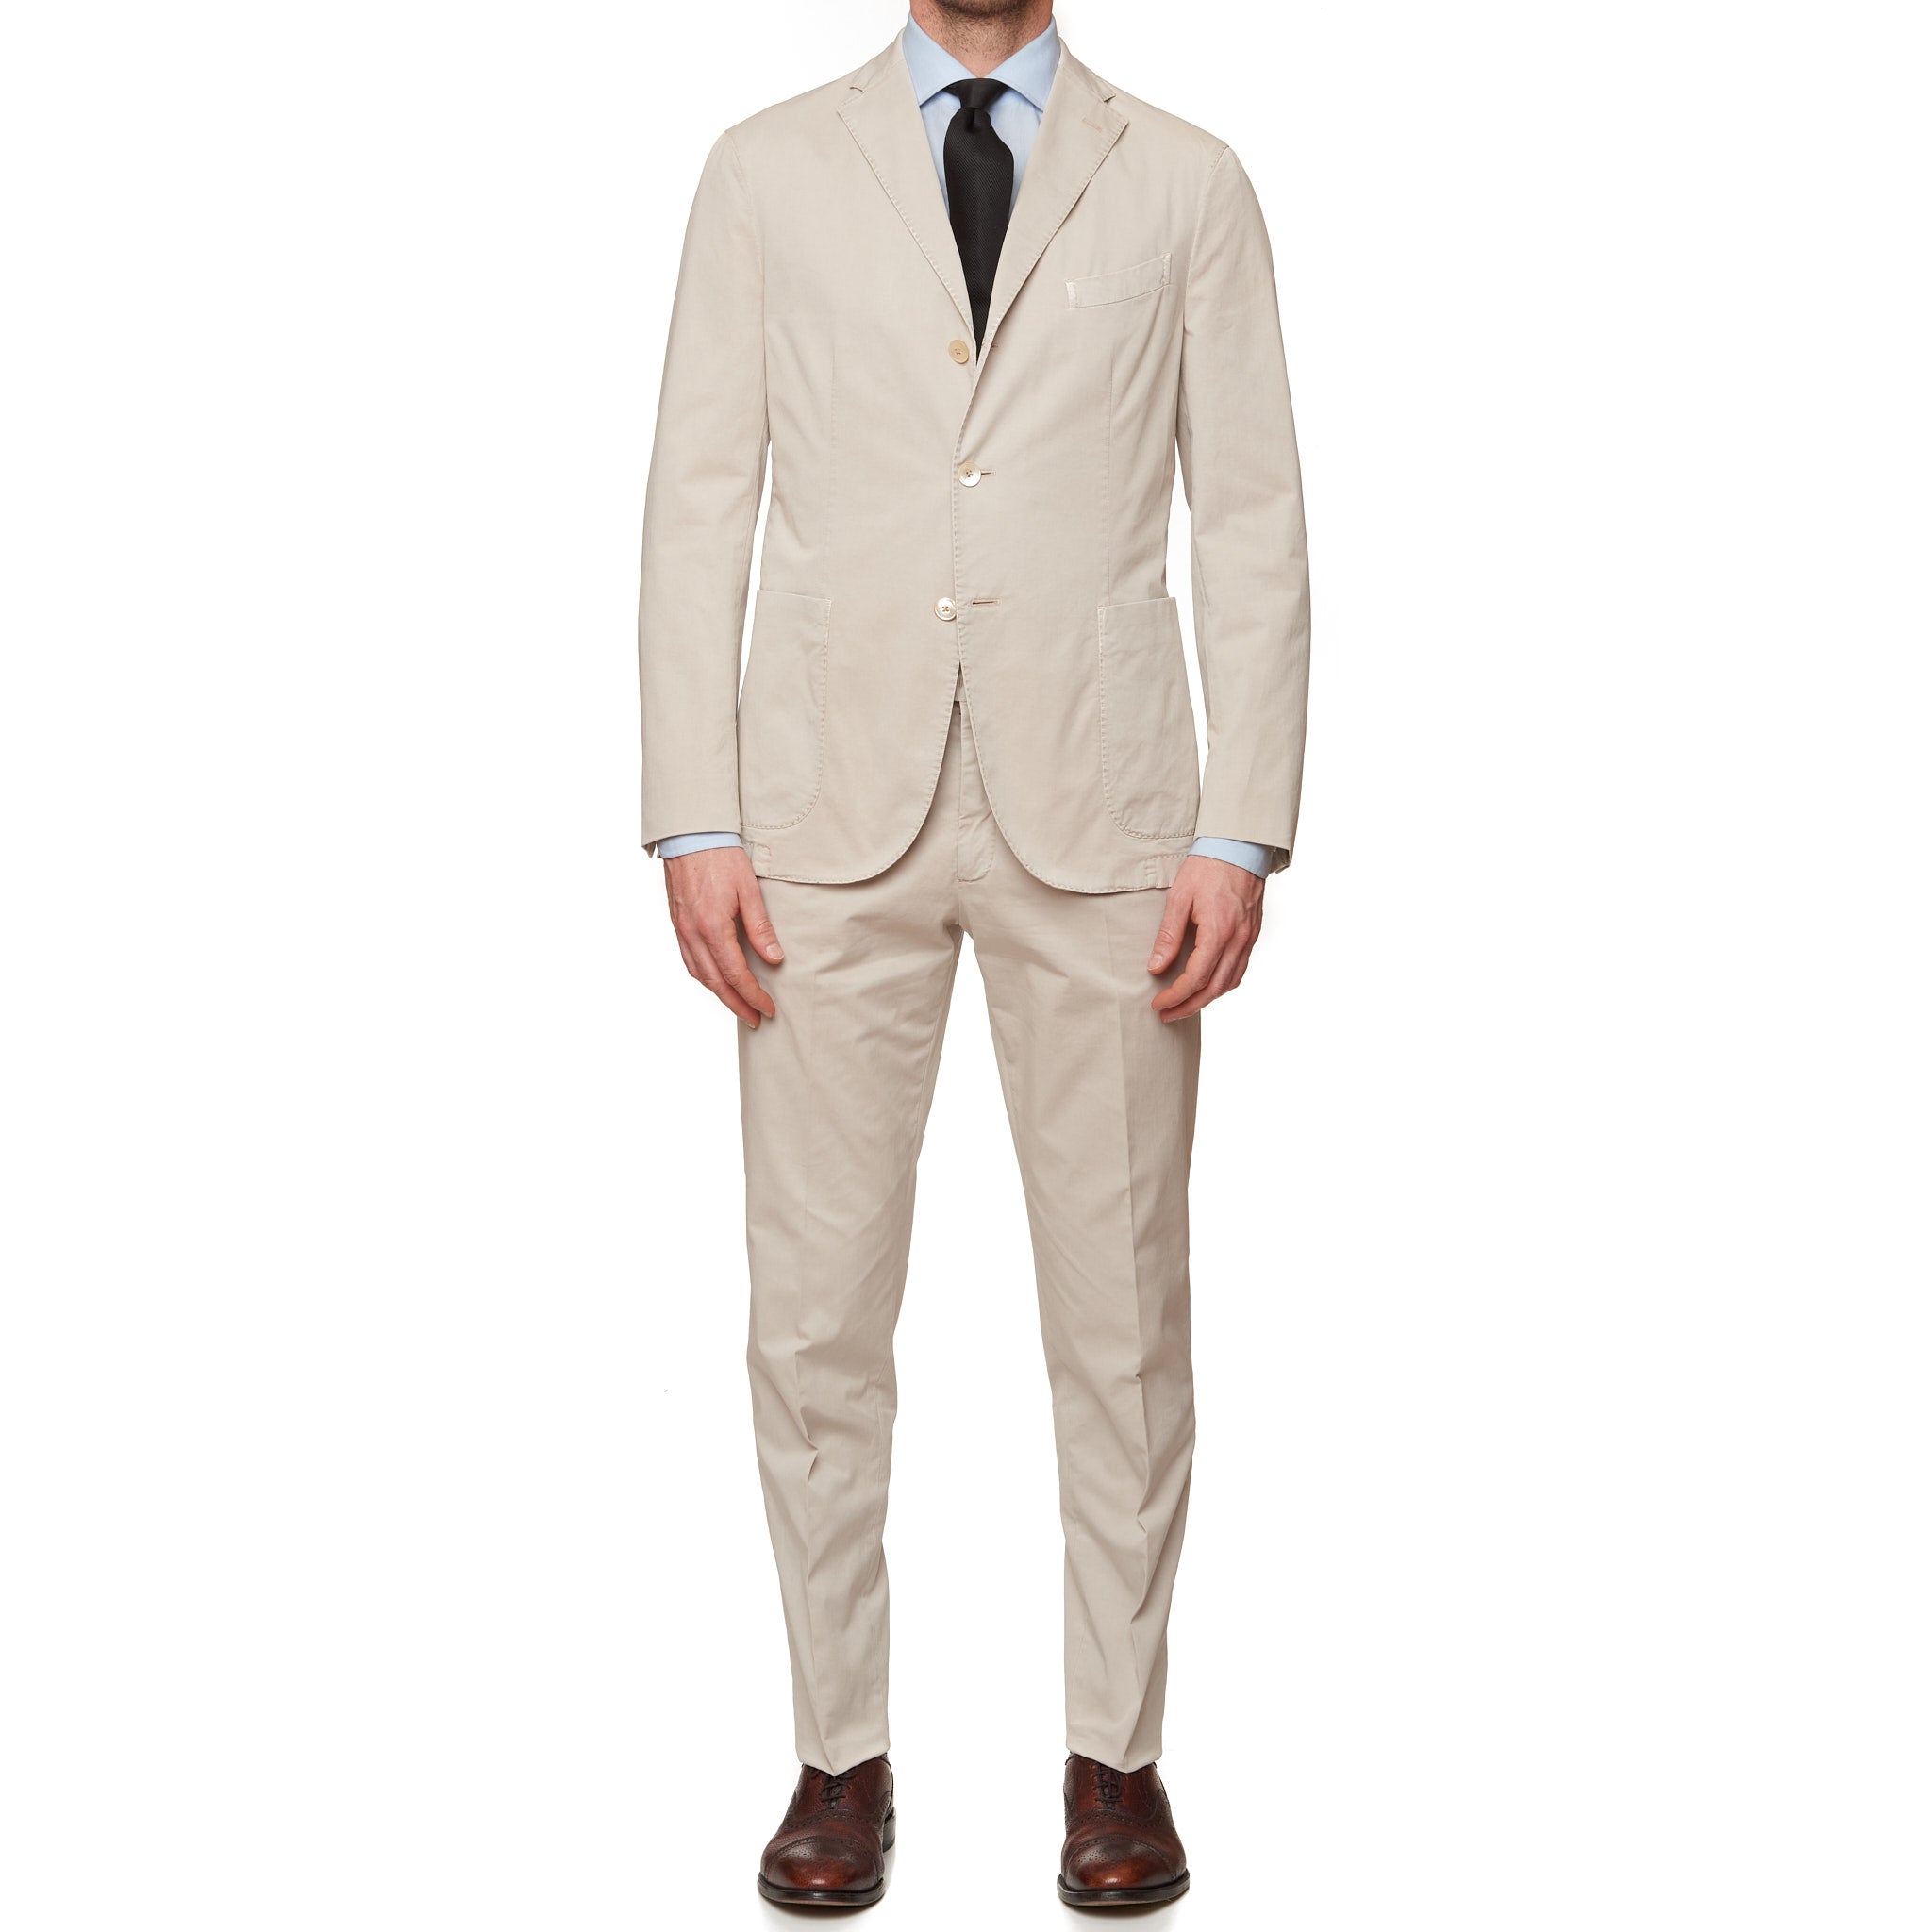 BOGLIOLI Milano "K. Jacket" Beige Twill Cotton 3 Button Unlined Suit NEW BOGLIOLI